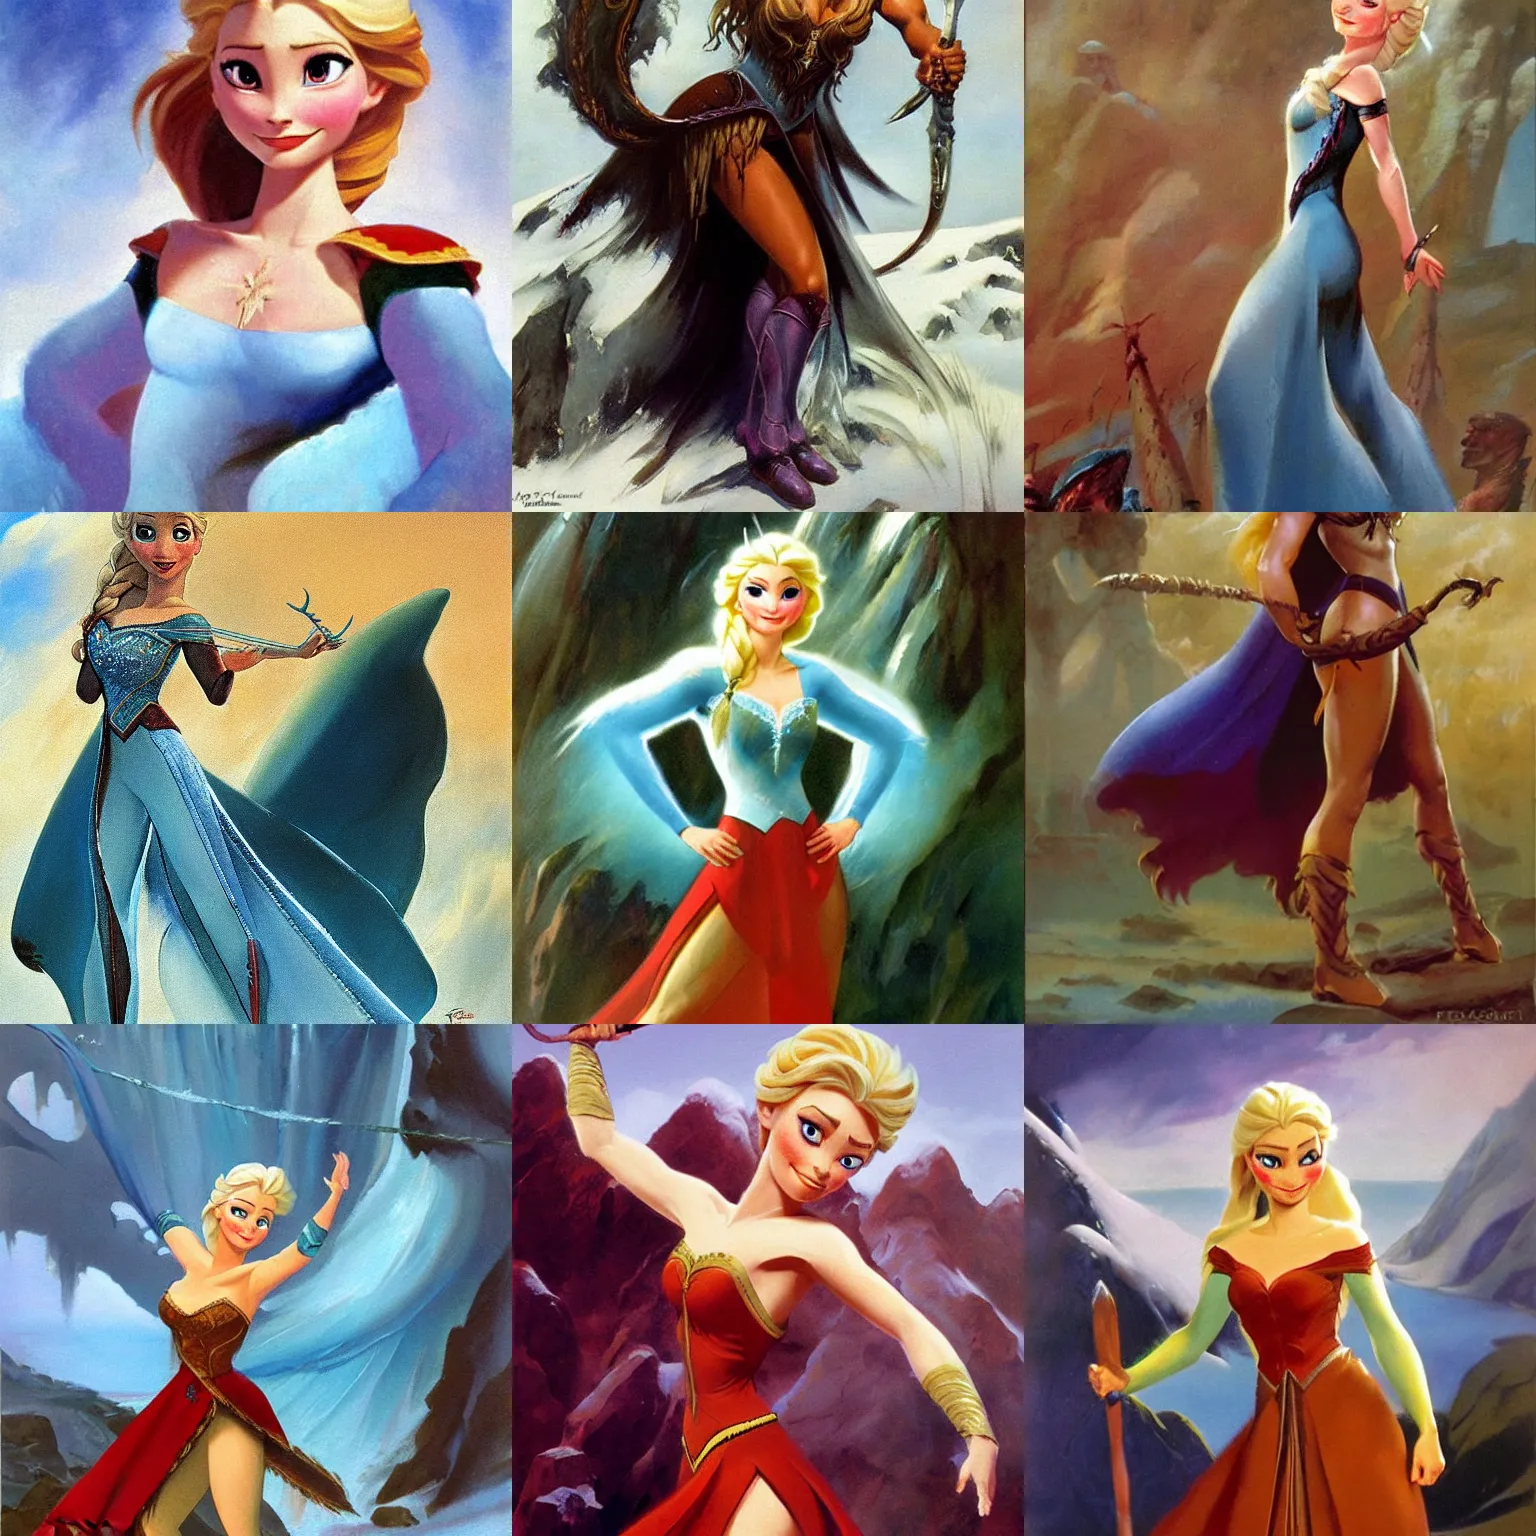 Prompt: Elsa from Frozen as warrior princess, oil painting by Frank Frazetta, Boris Vallejo